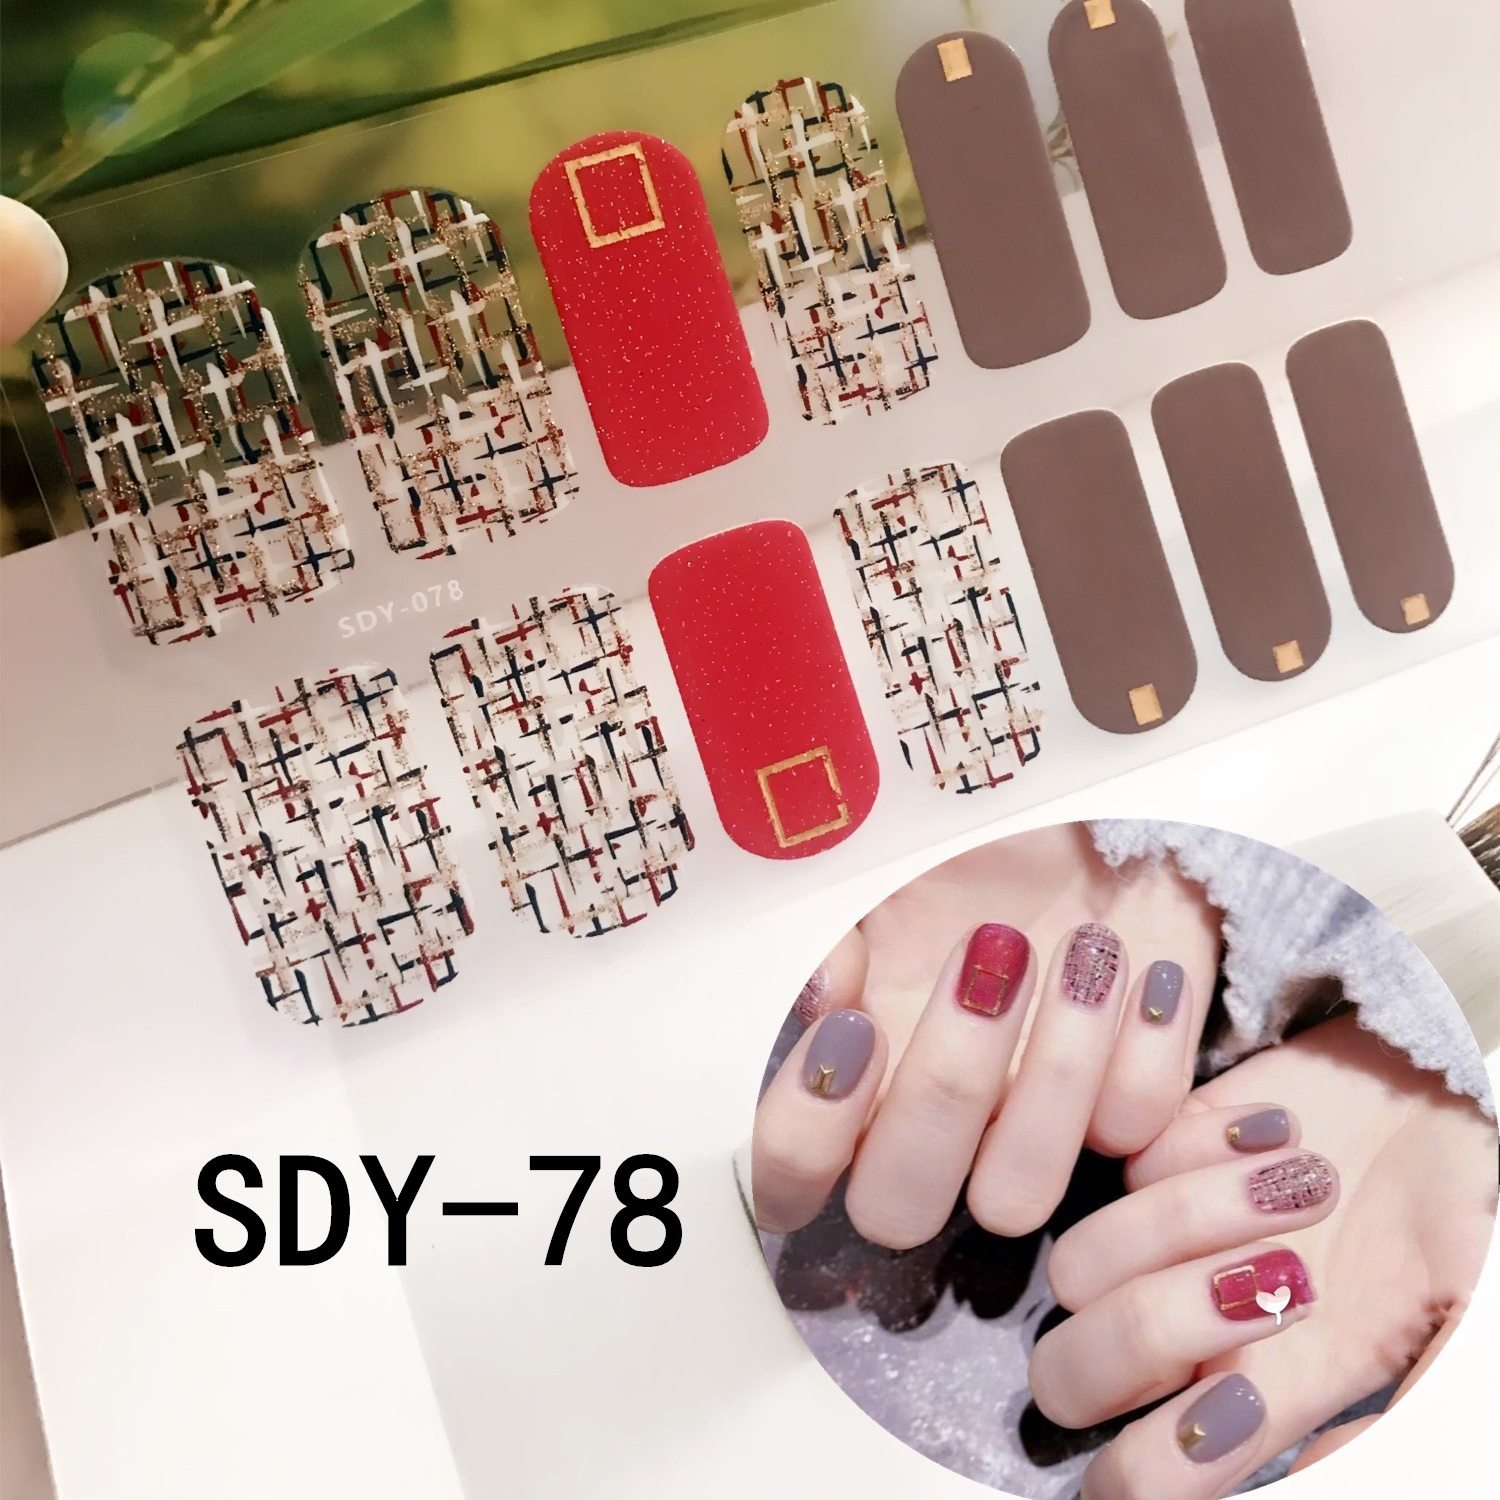 SDY-78